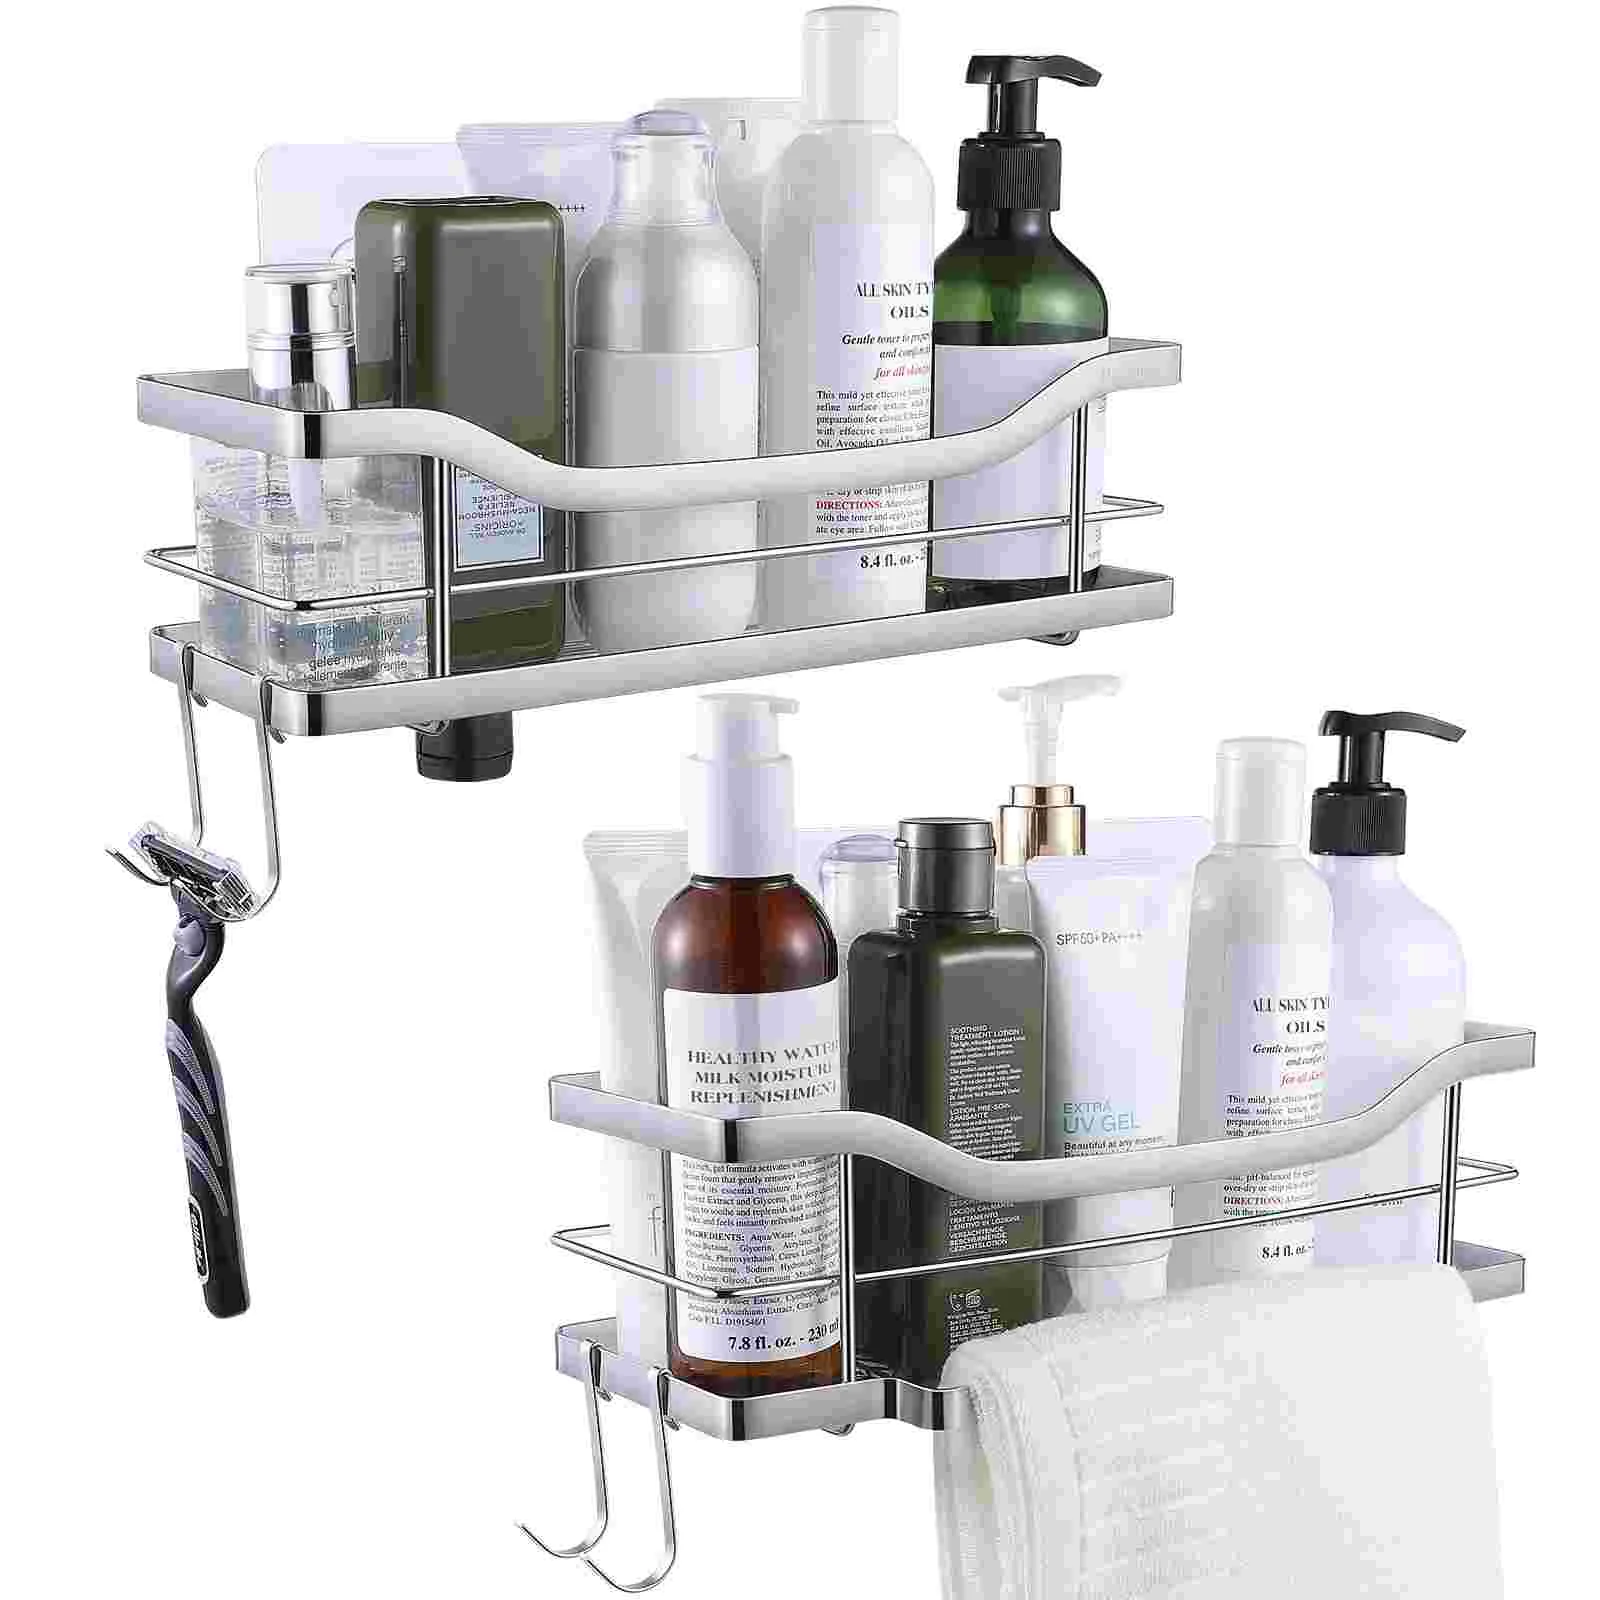 

HOMEMAXS 2PCS Shower Caddy Bathroom Storage Shelf Wall Mounted Rack Shower Organizer Storage Rack